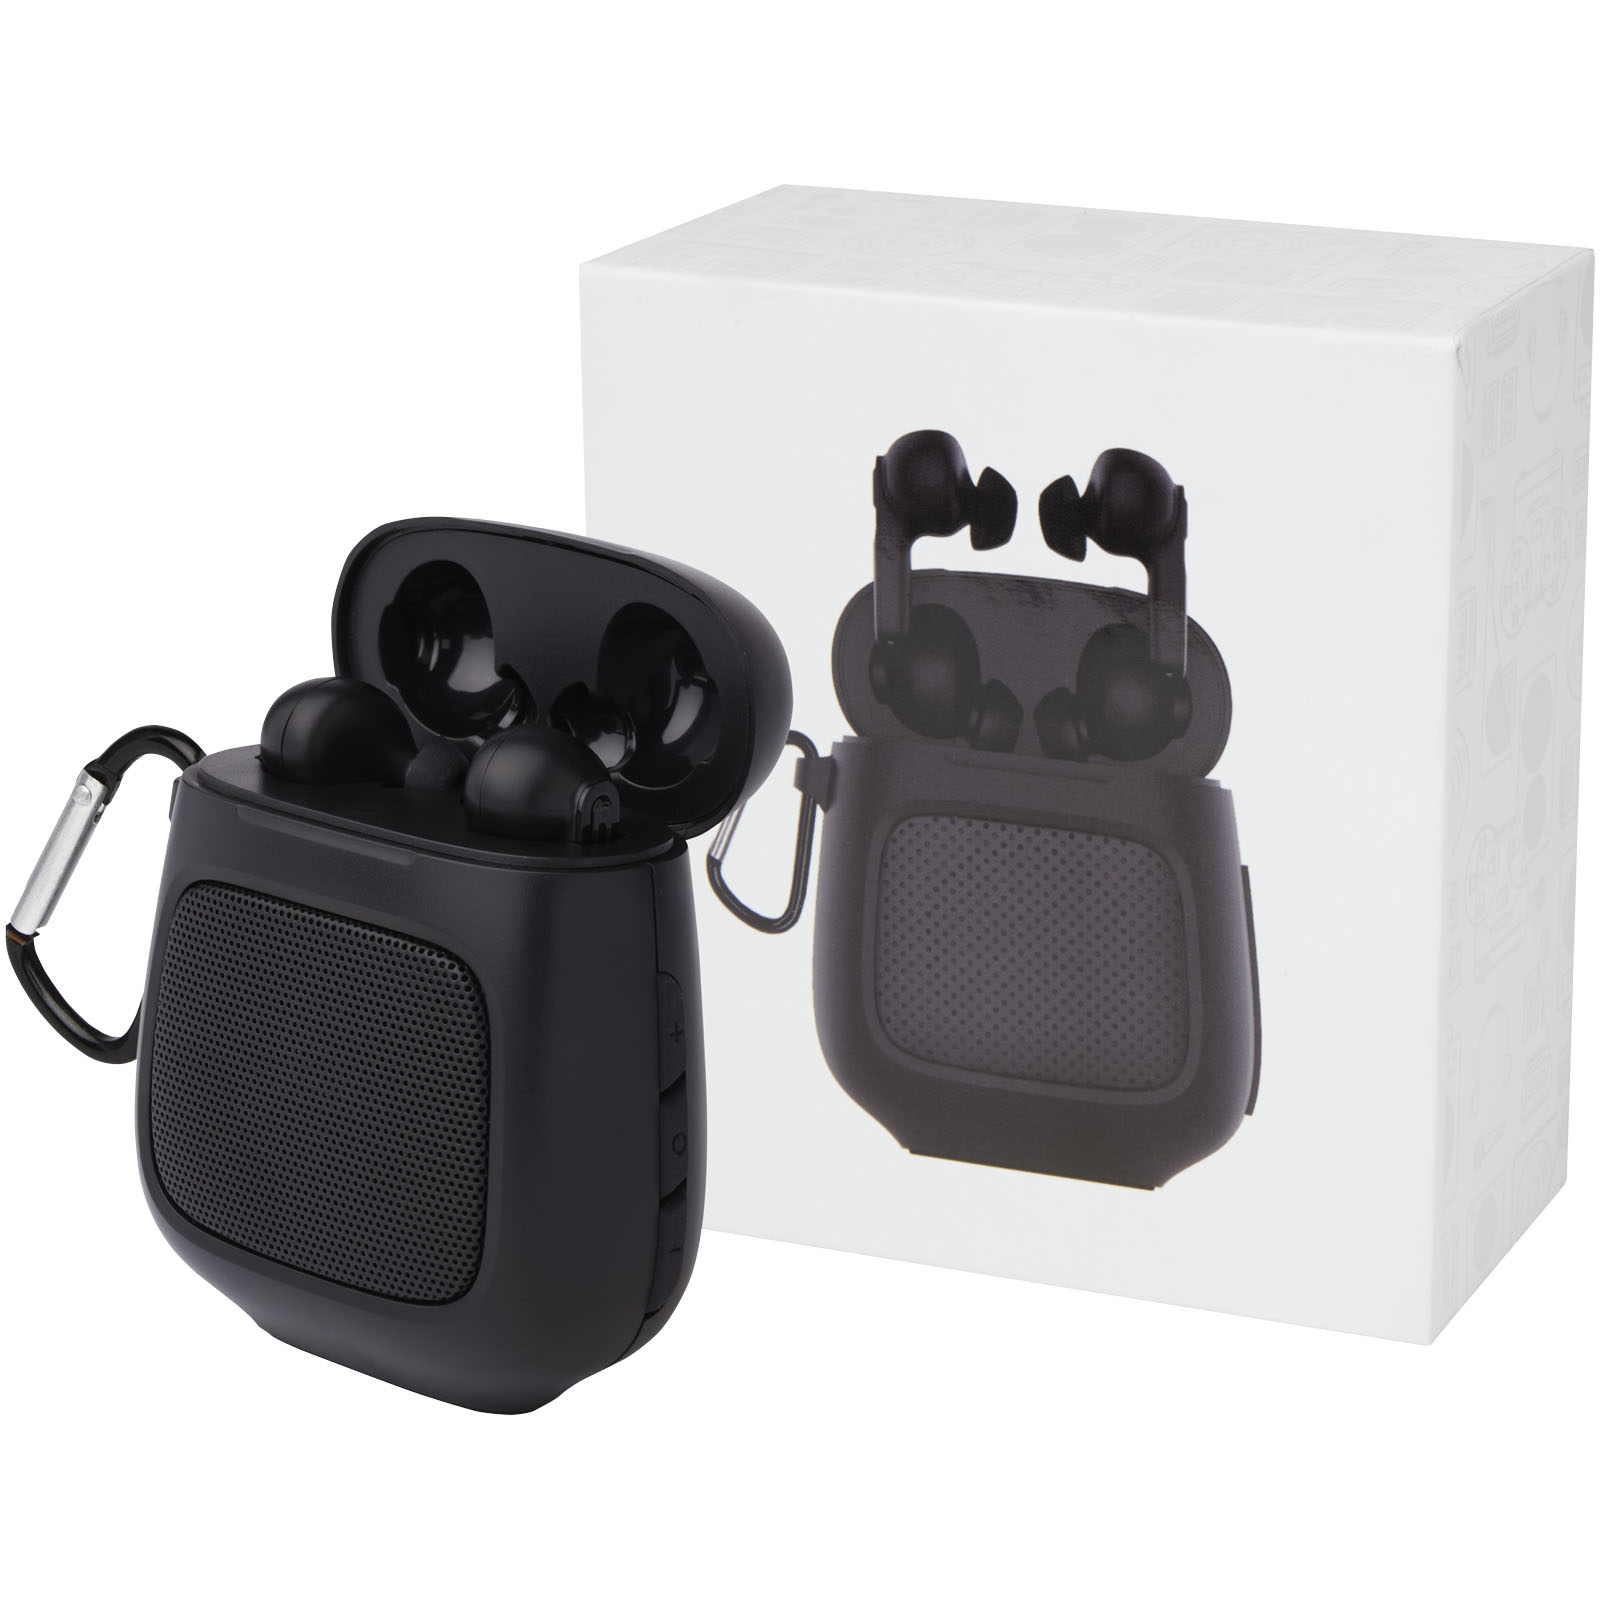 Advertising Speakers - Remix auto pair True Wireless earbuds and speaker - 5